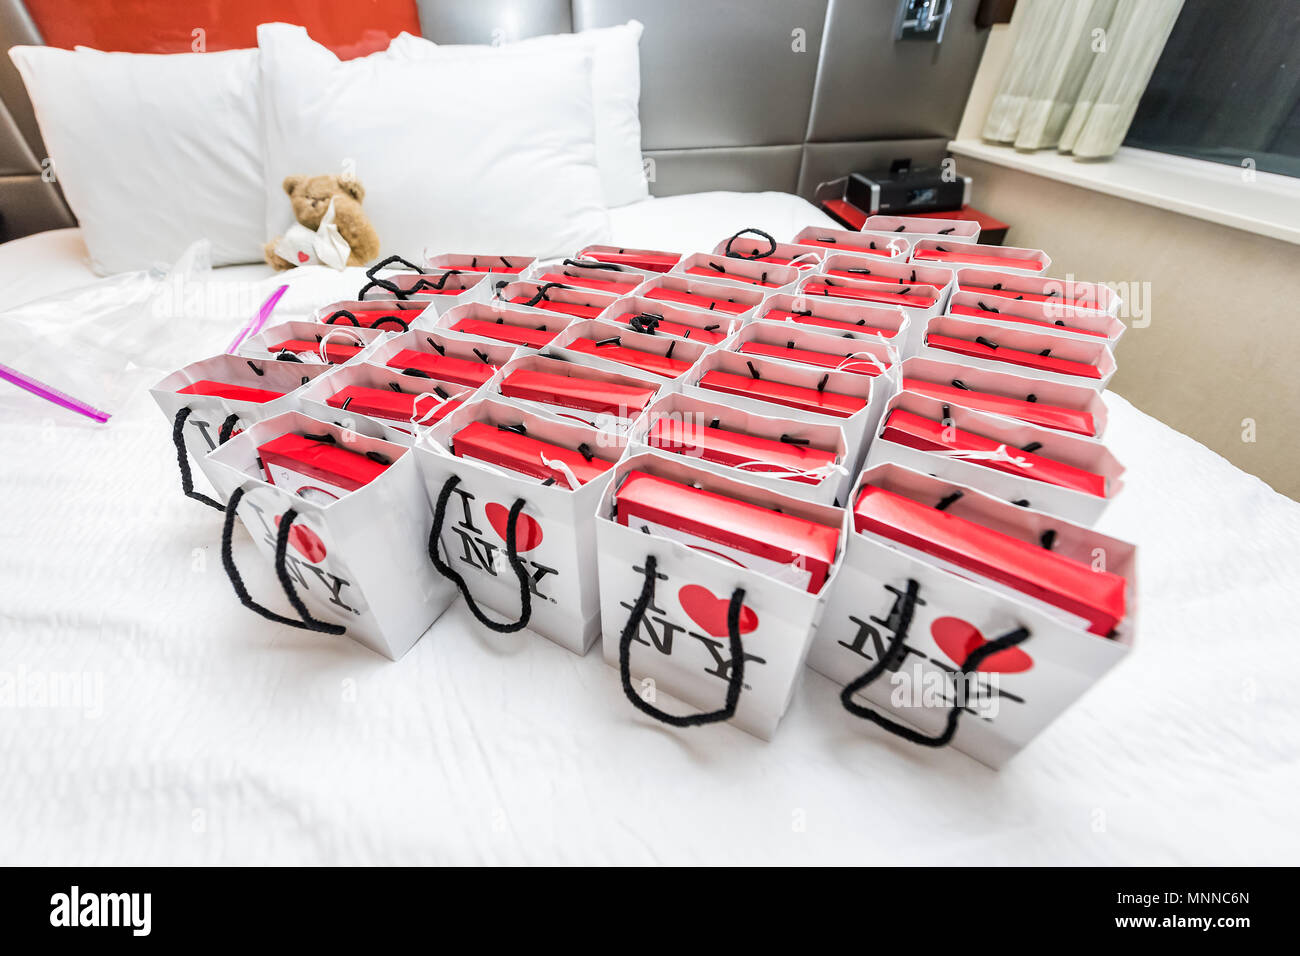 New York City, USA - April 6, 2018: Many I heart love NY NYC gift bags on hotel room bed as wedding favors closeup Stock Photo